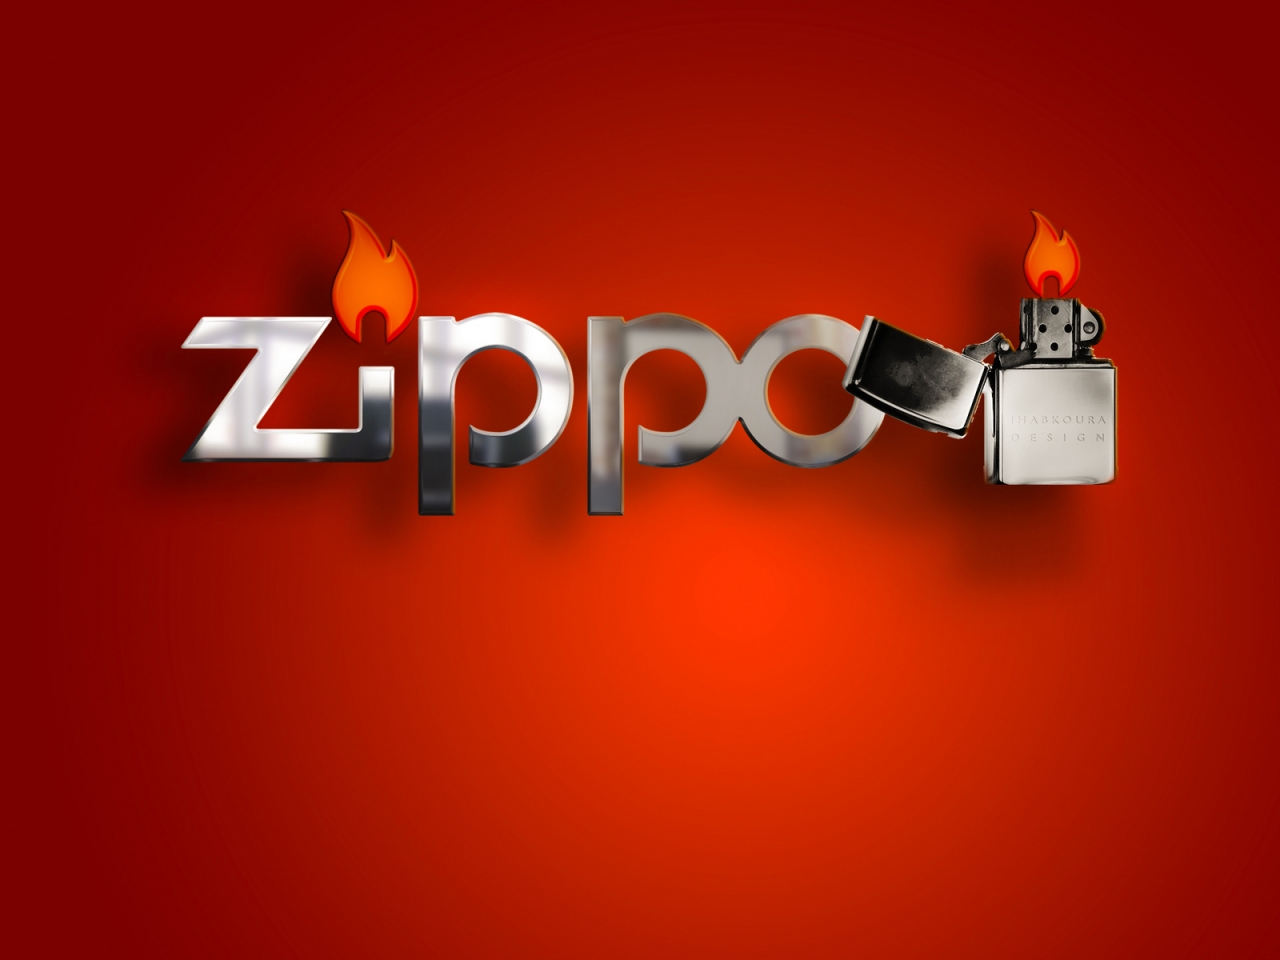 Zippo Lighter for 1280 x 960 resolution